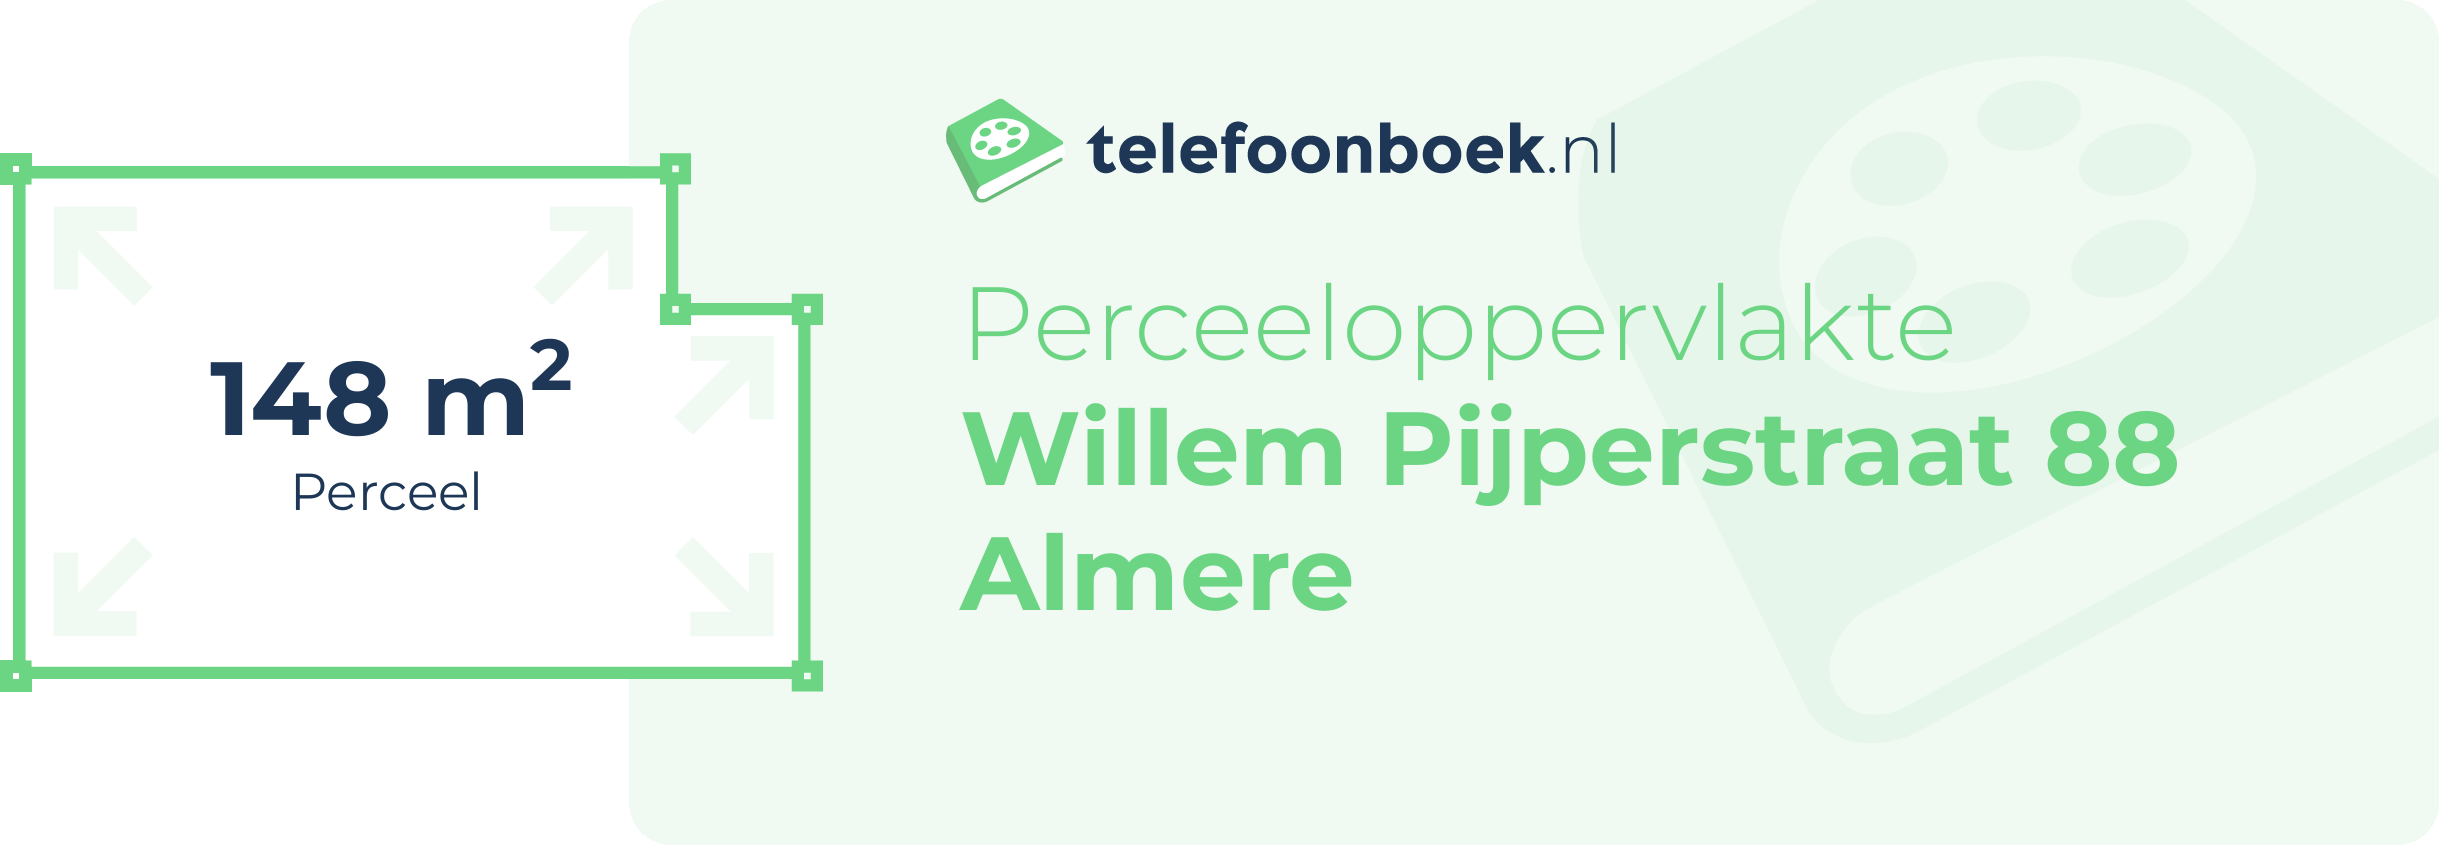 Perceeloppervlakte Willem Pijperstraat 88 Almere